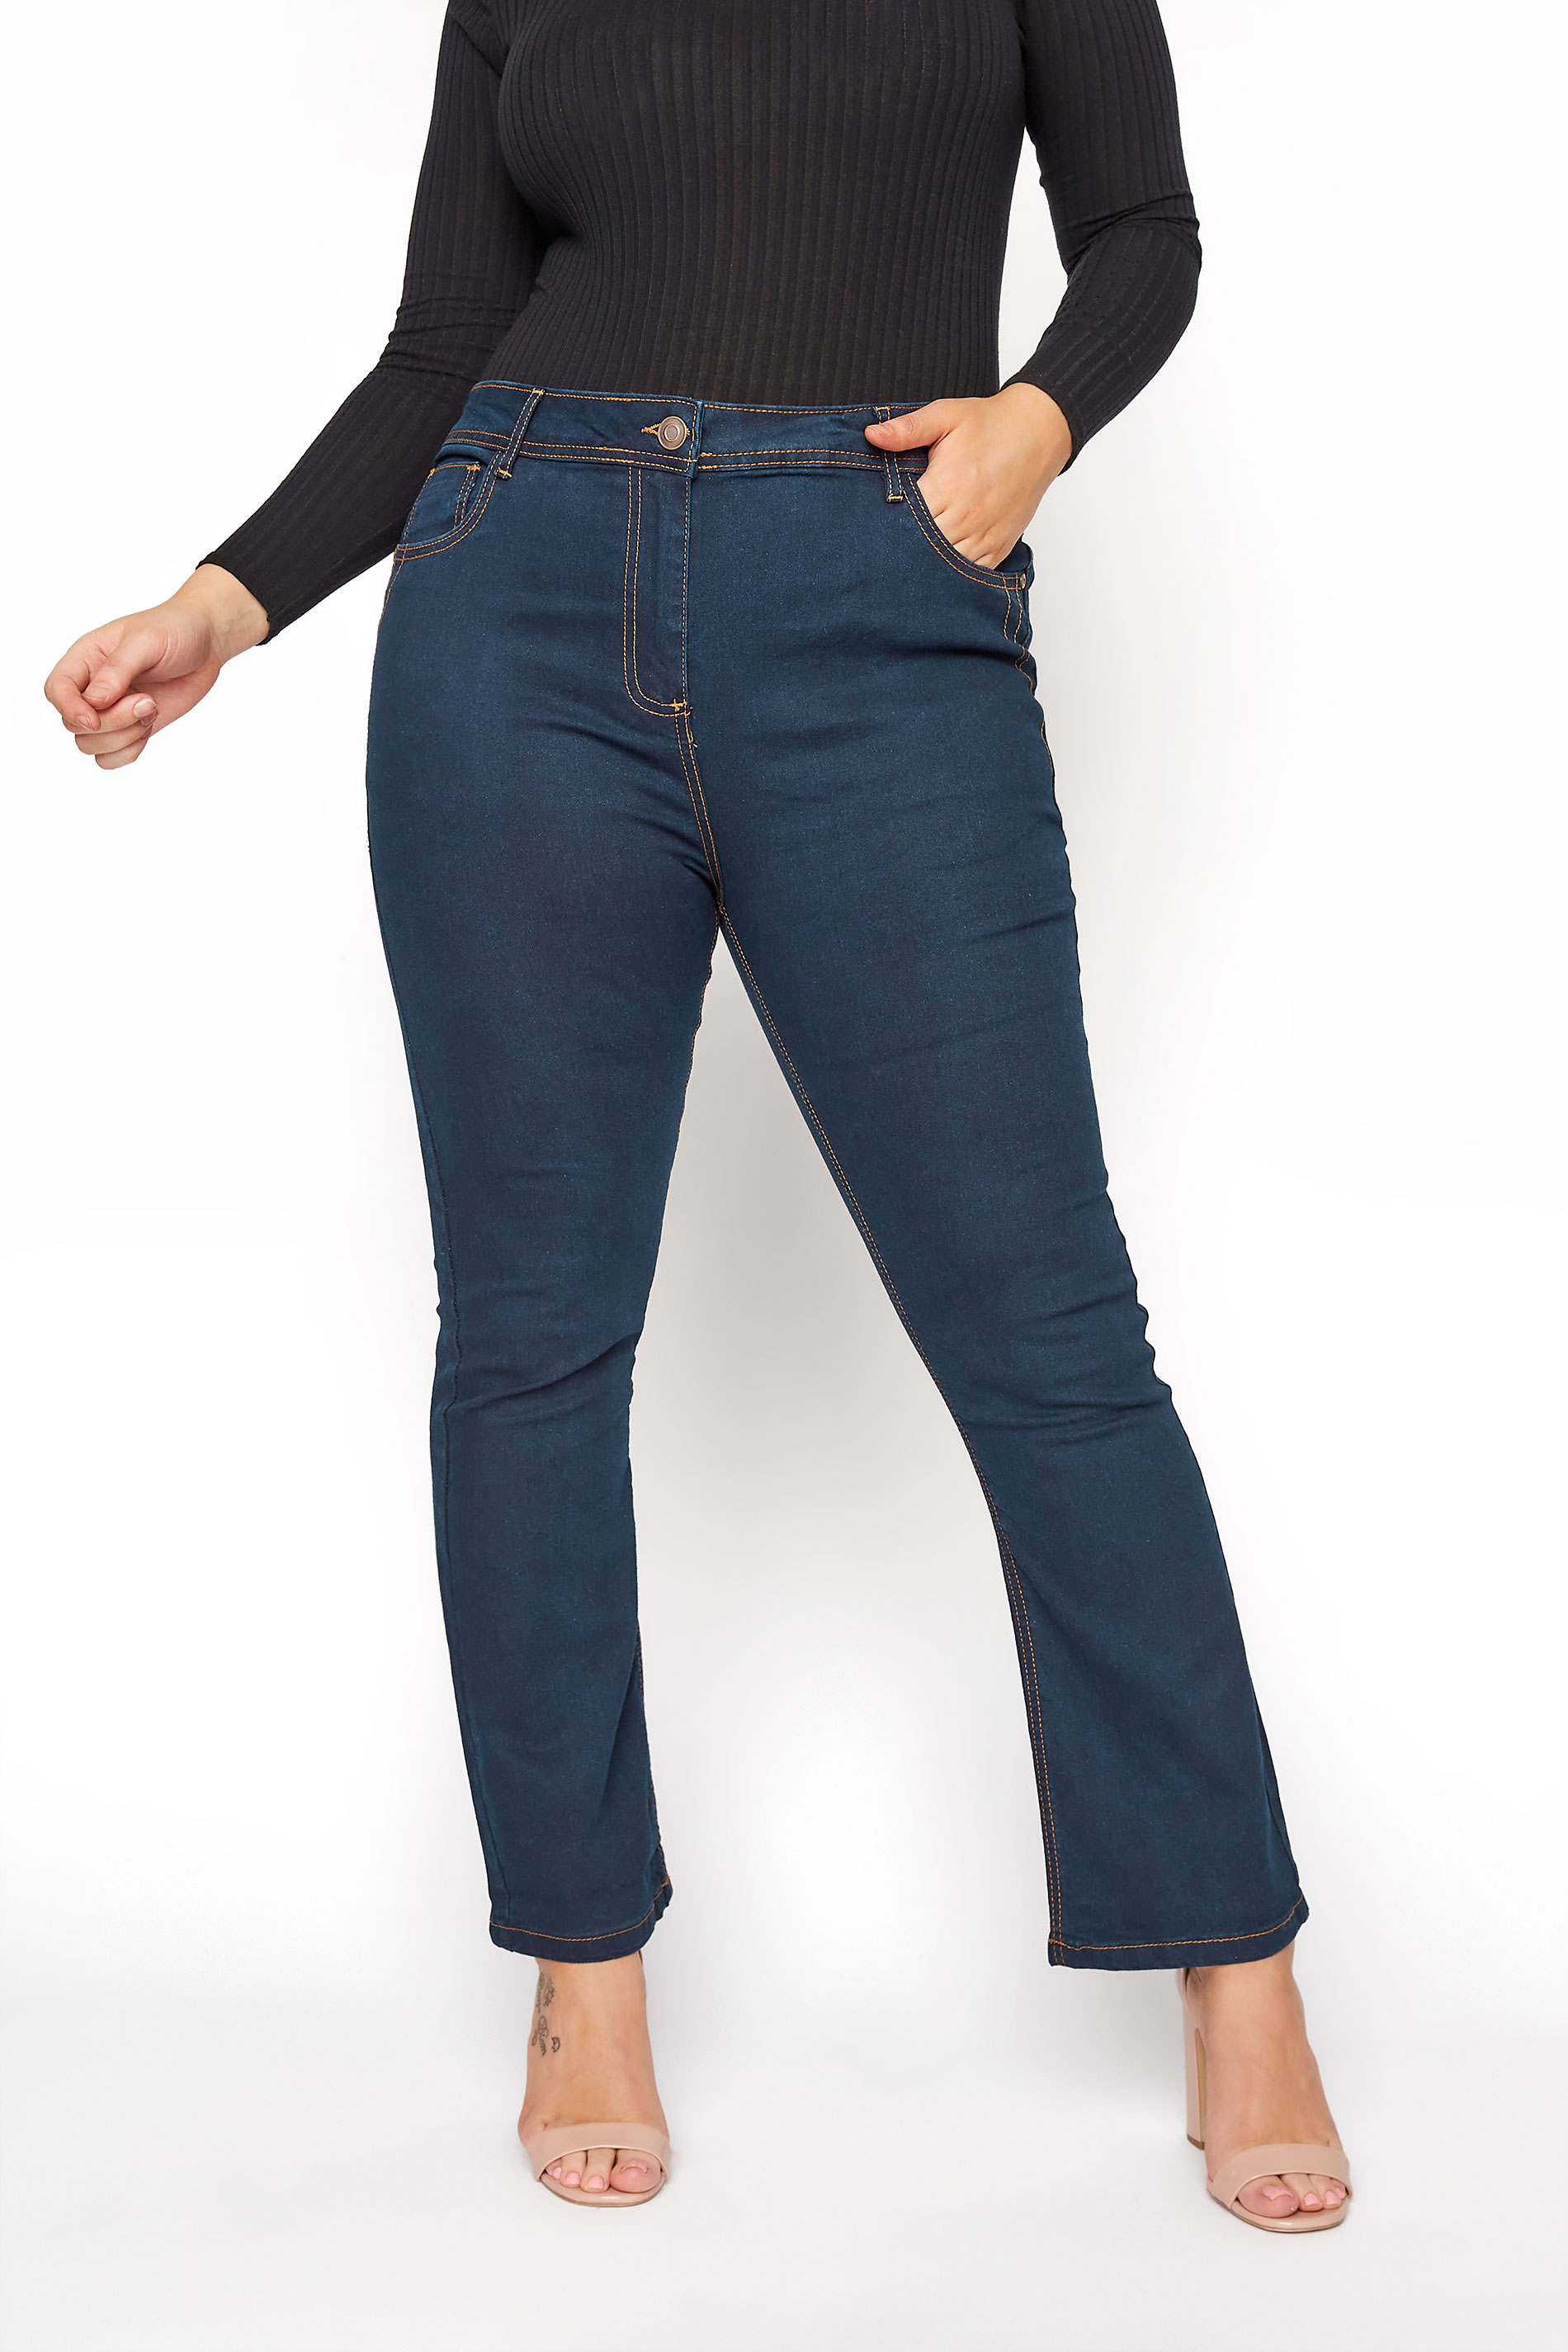 Indigo Bootcut 5 Pocket Denim Jeans Plus Size 16 to 32